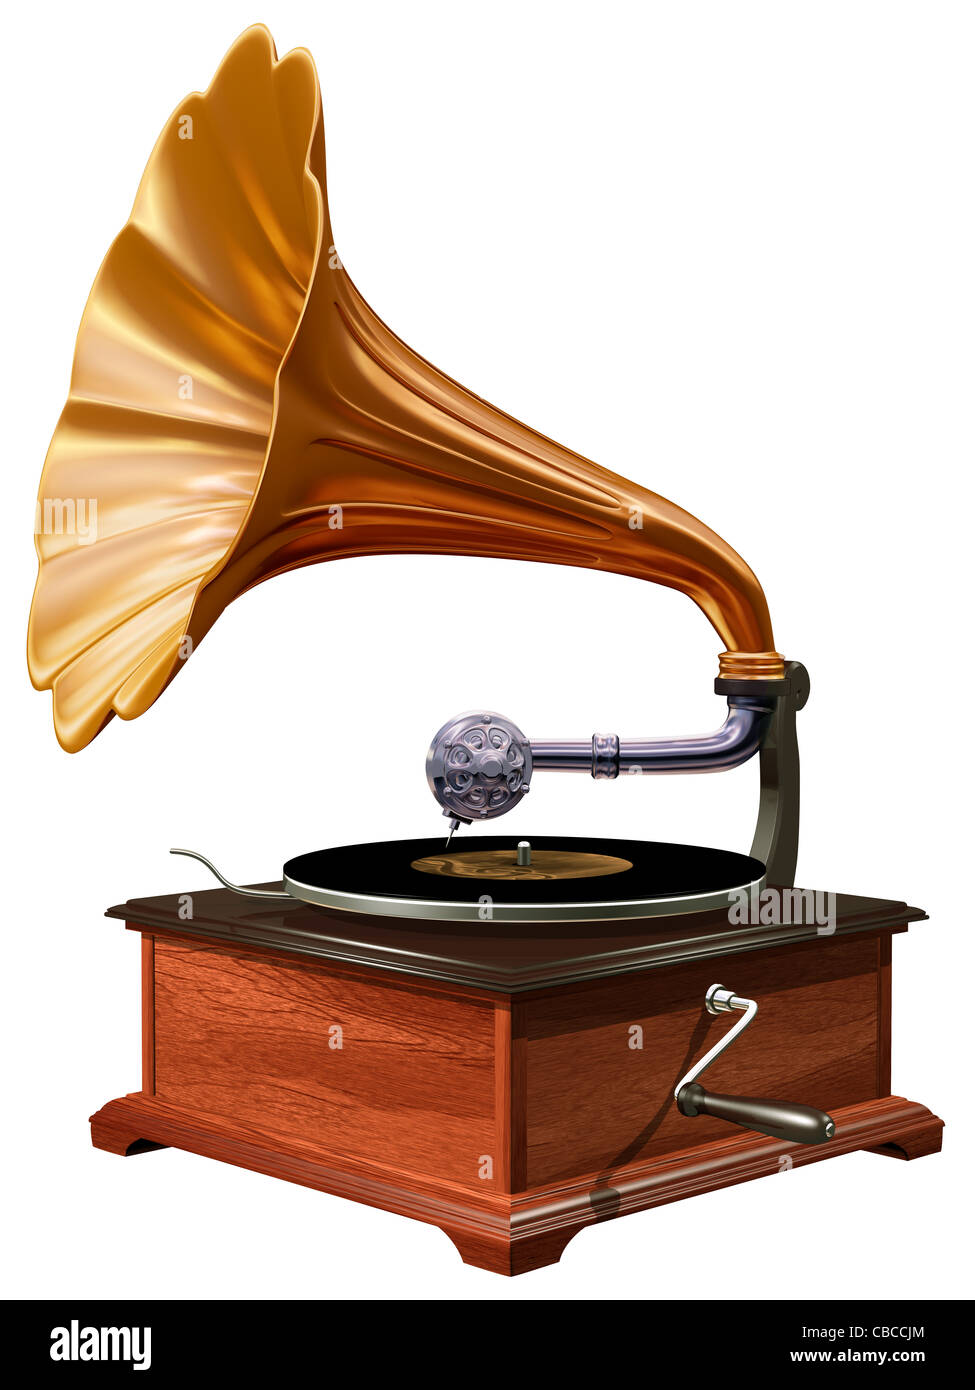 Isolated illustration of antique windup gramophone Stock Photo